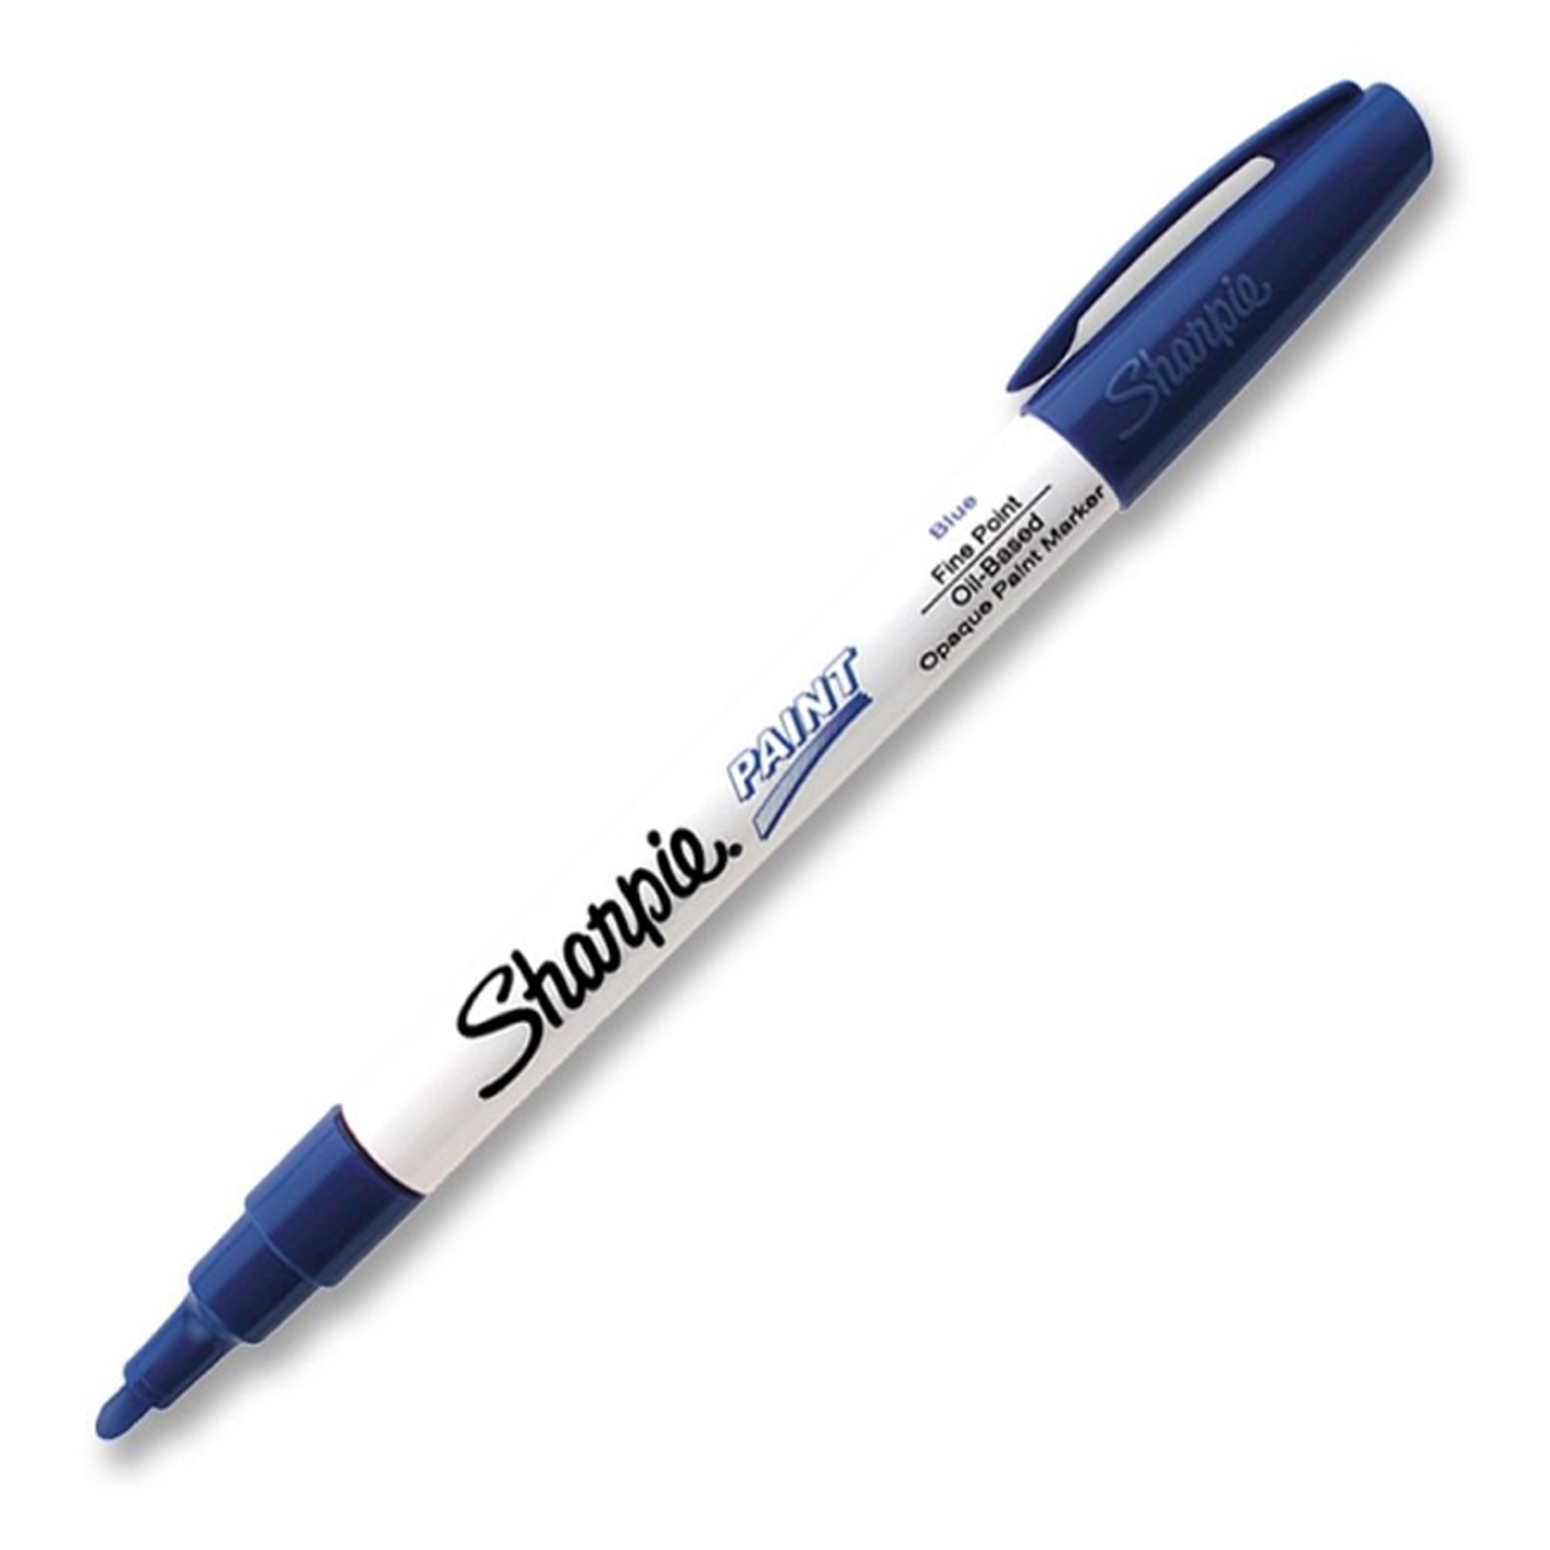 Sharpie Oil-Based Paint Blue Fine Point Marker